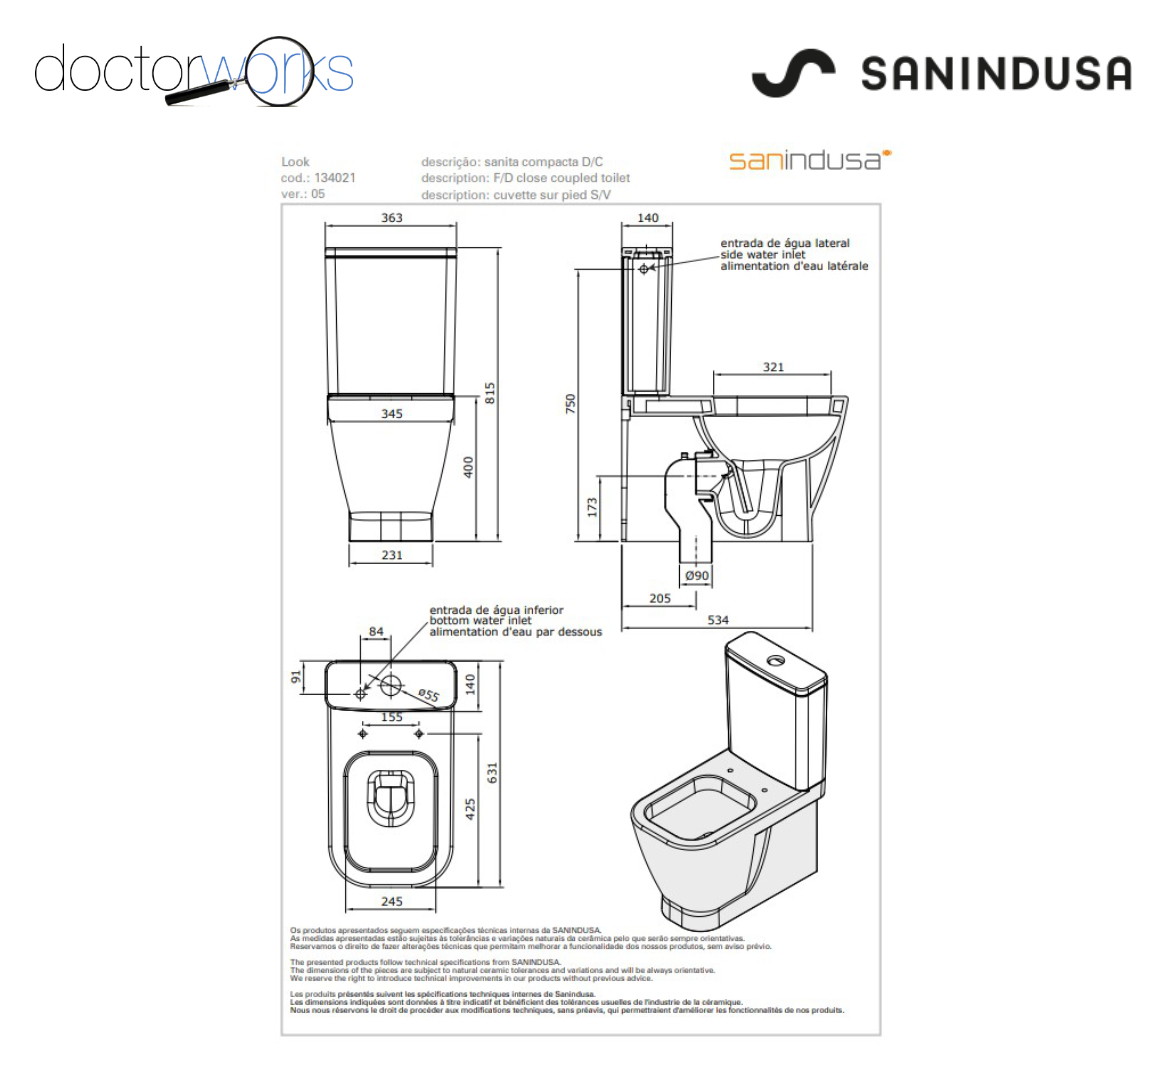 Inodoro completo Sanindusa mod. Look, cisterna baja y doble descarga